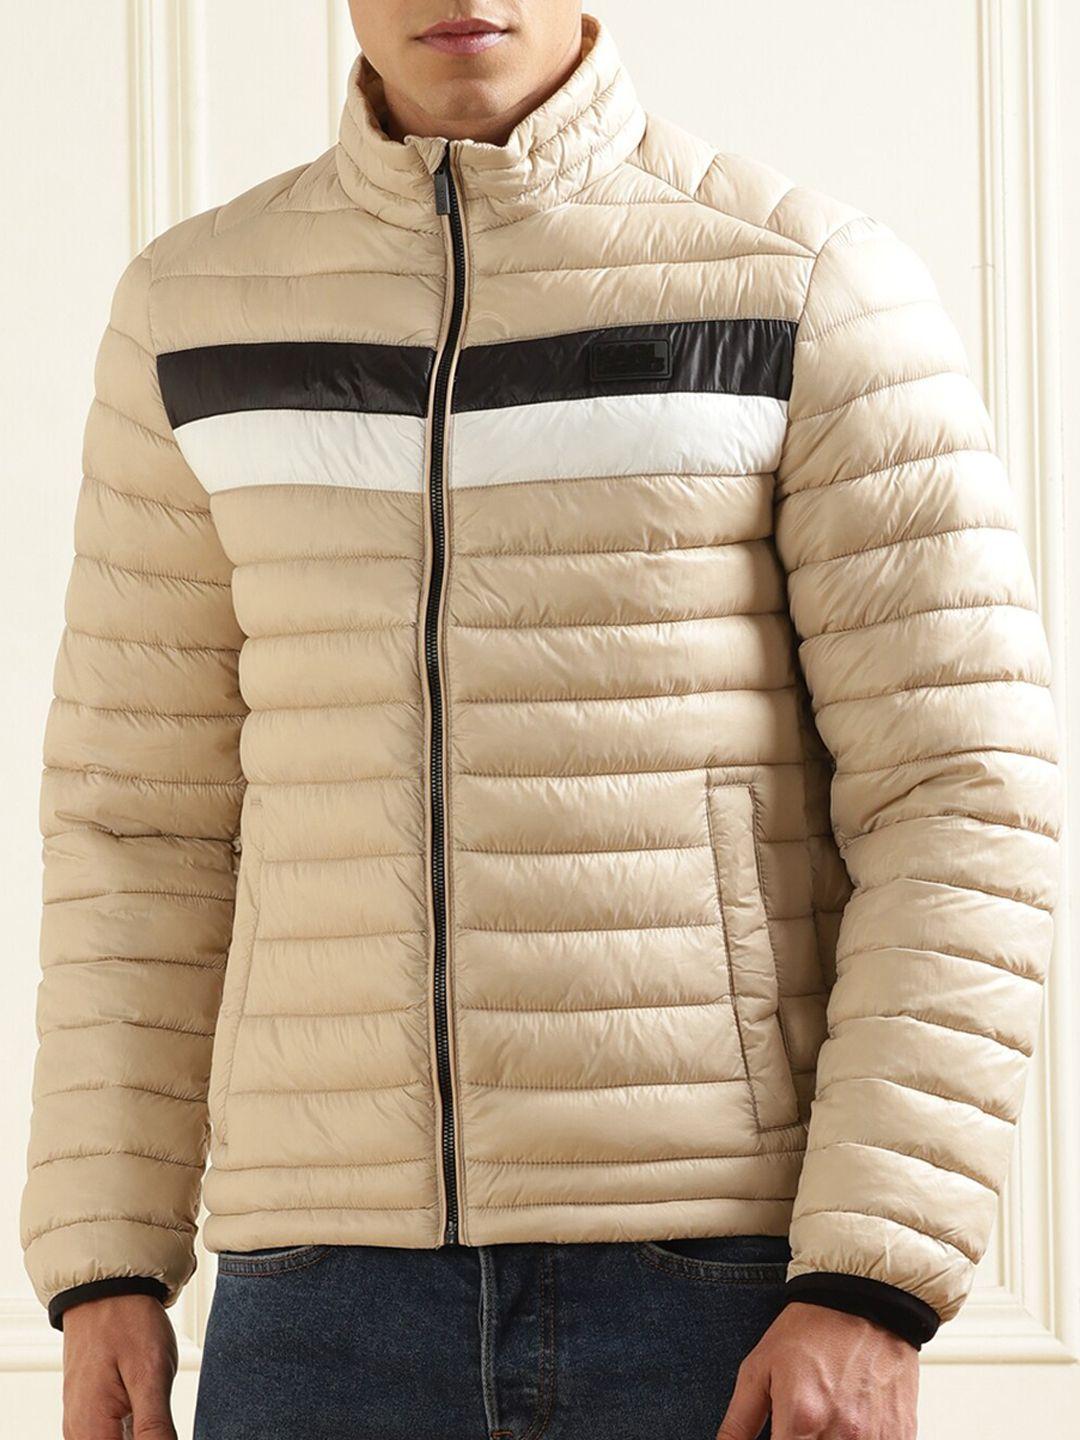 karl lagerfeld striped puffer jacket